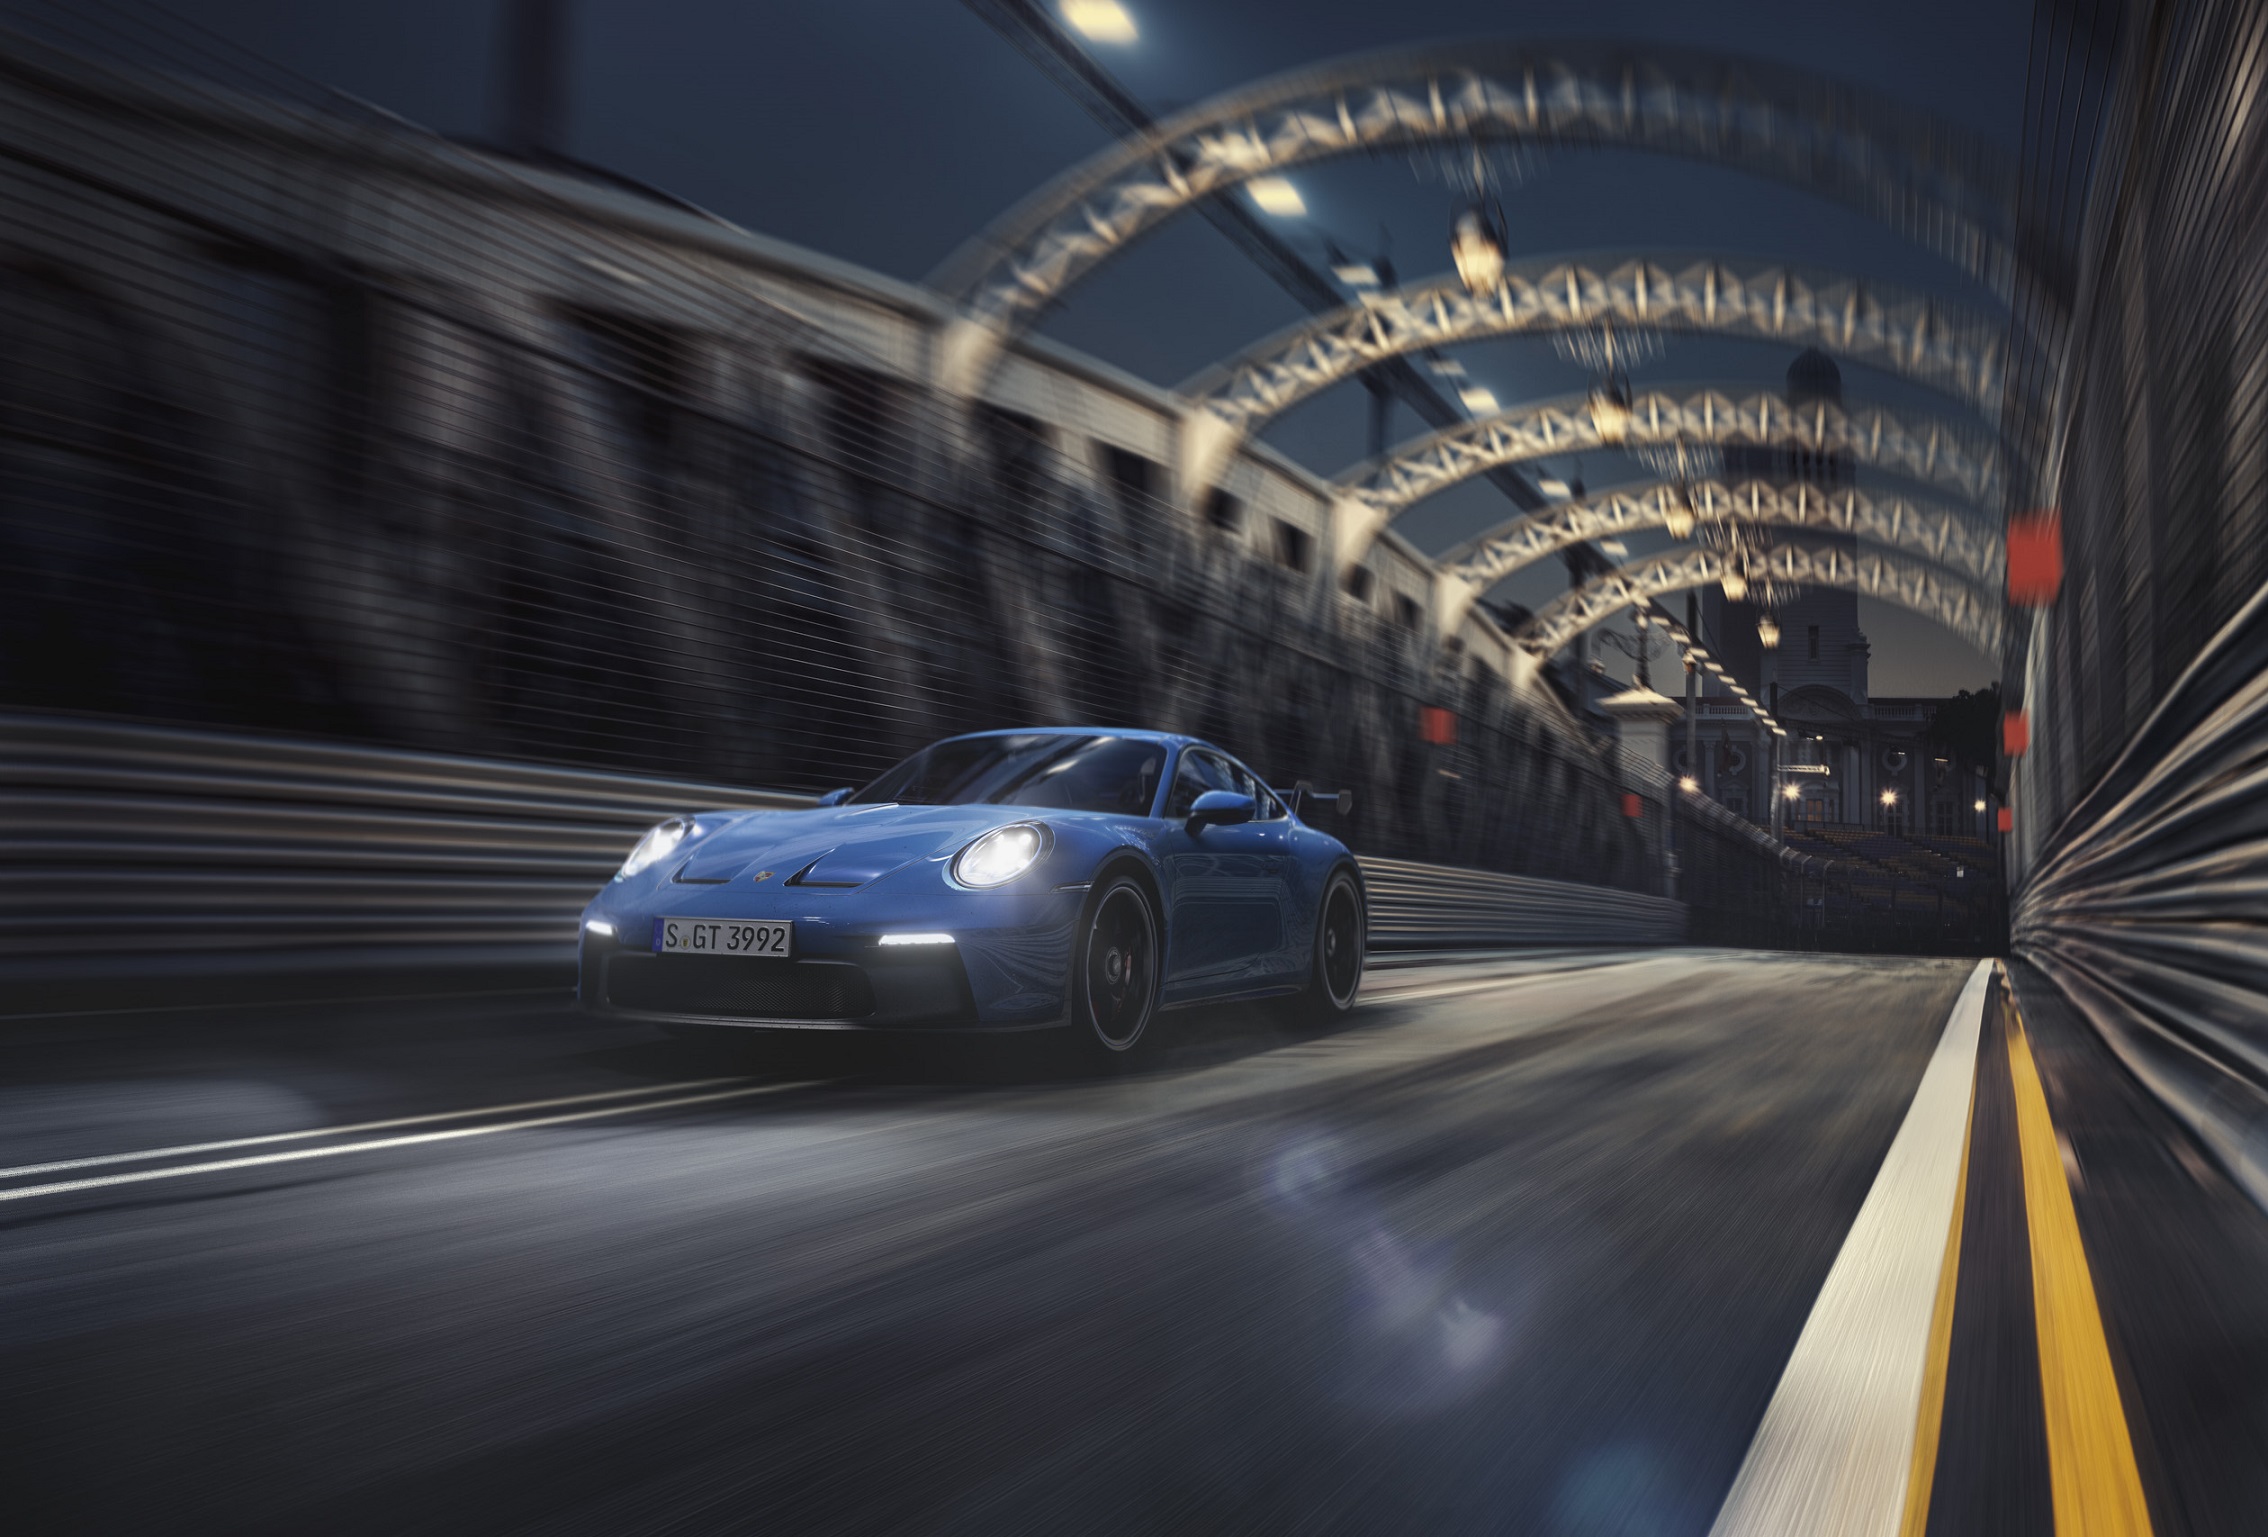 Motorsports technology meets the road: The 2022 Porsche 911 GT3